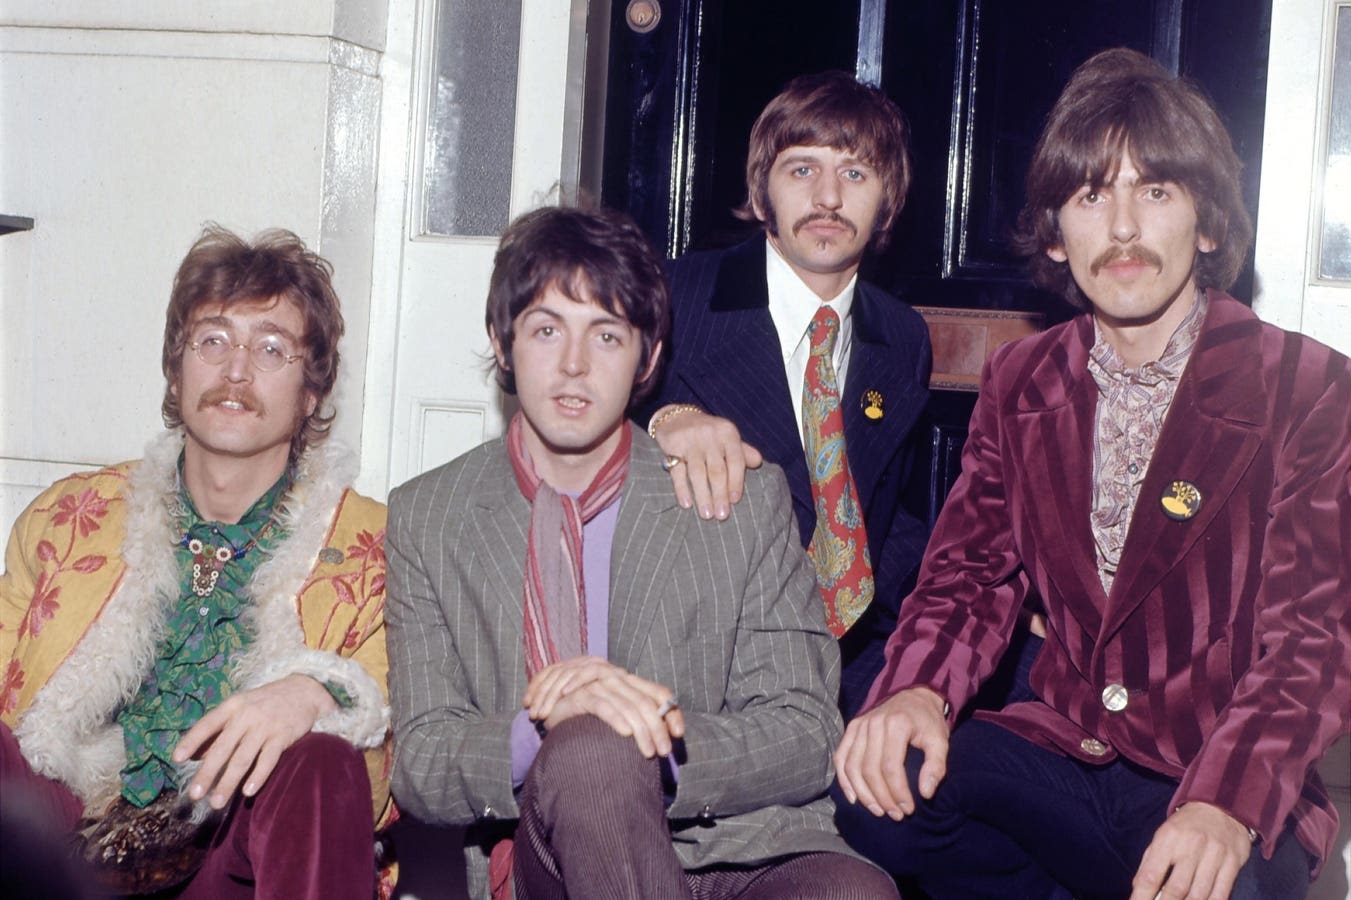 The Beatles’ Most Successful Album Reaches A New Milestone